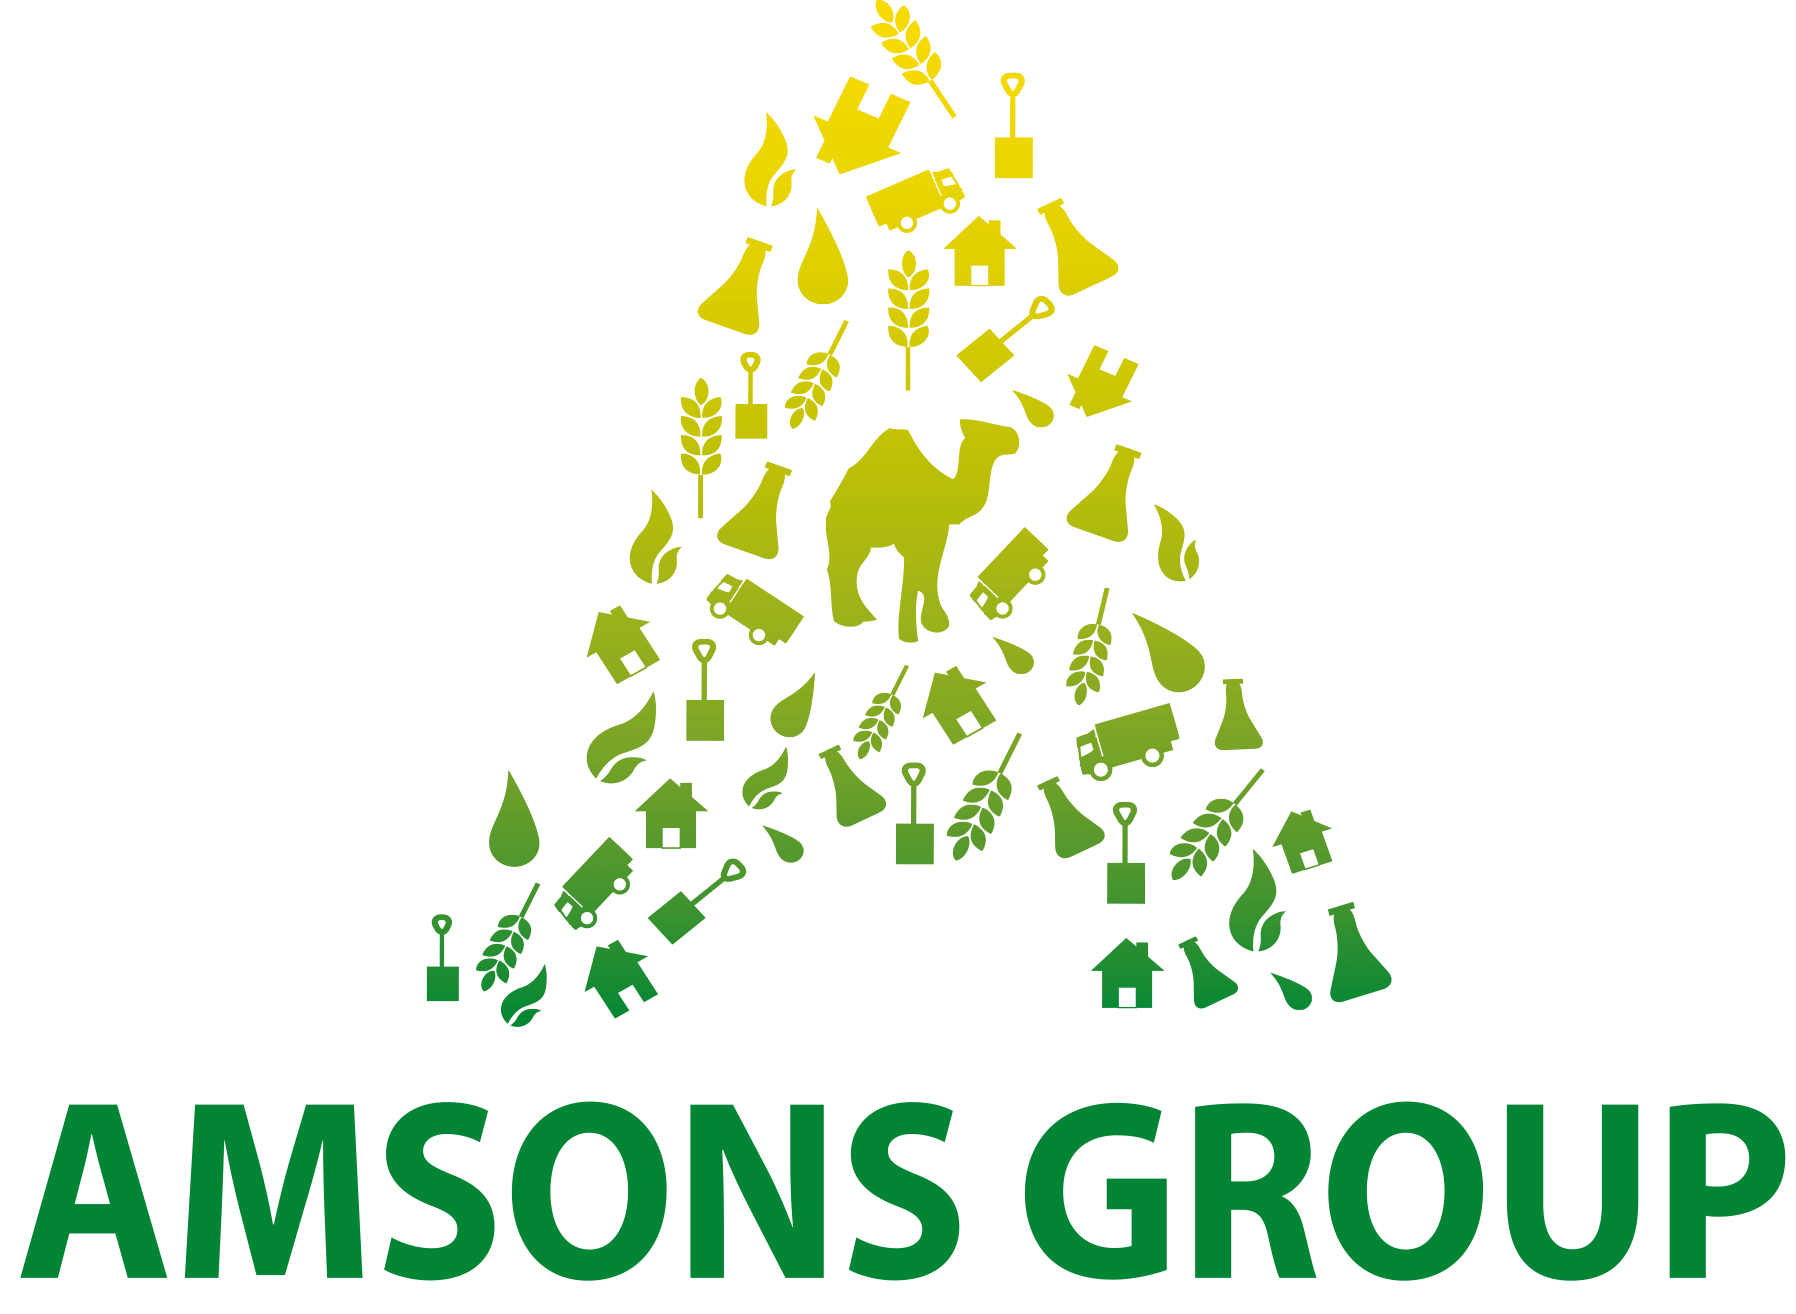 Amsons Group